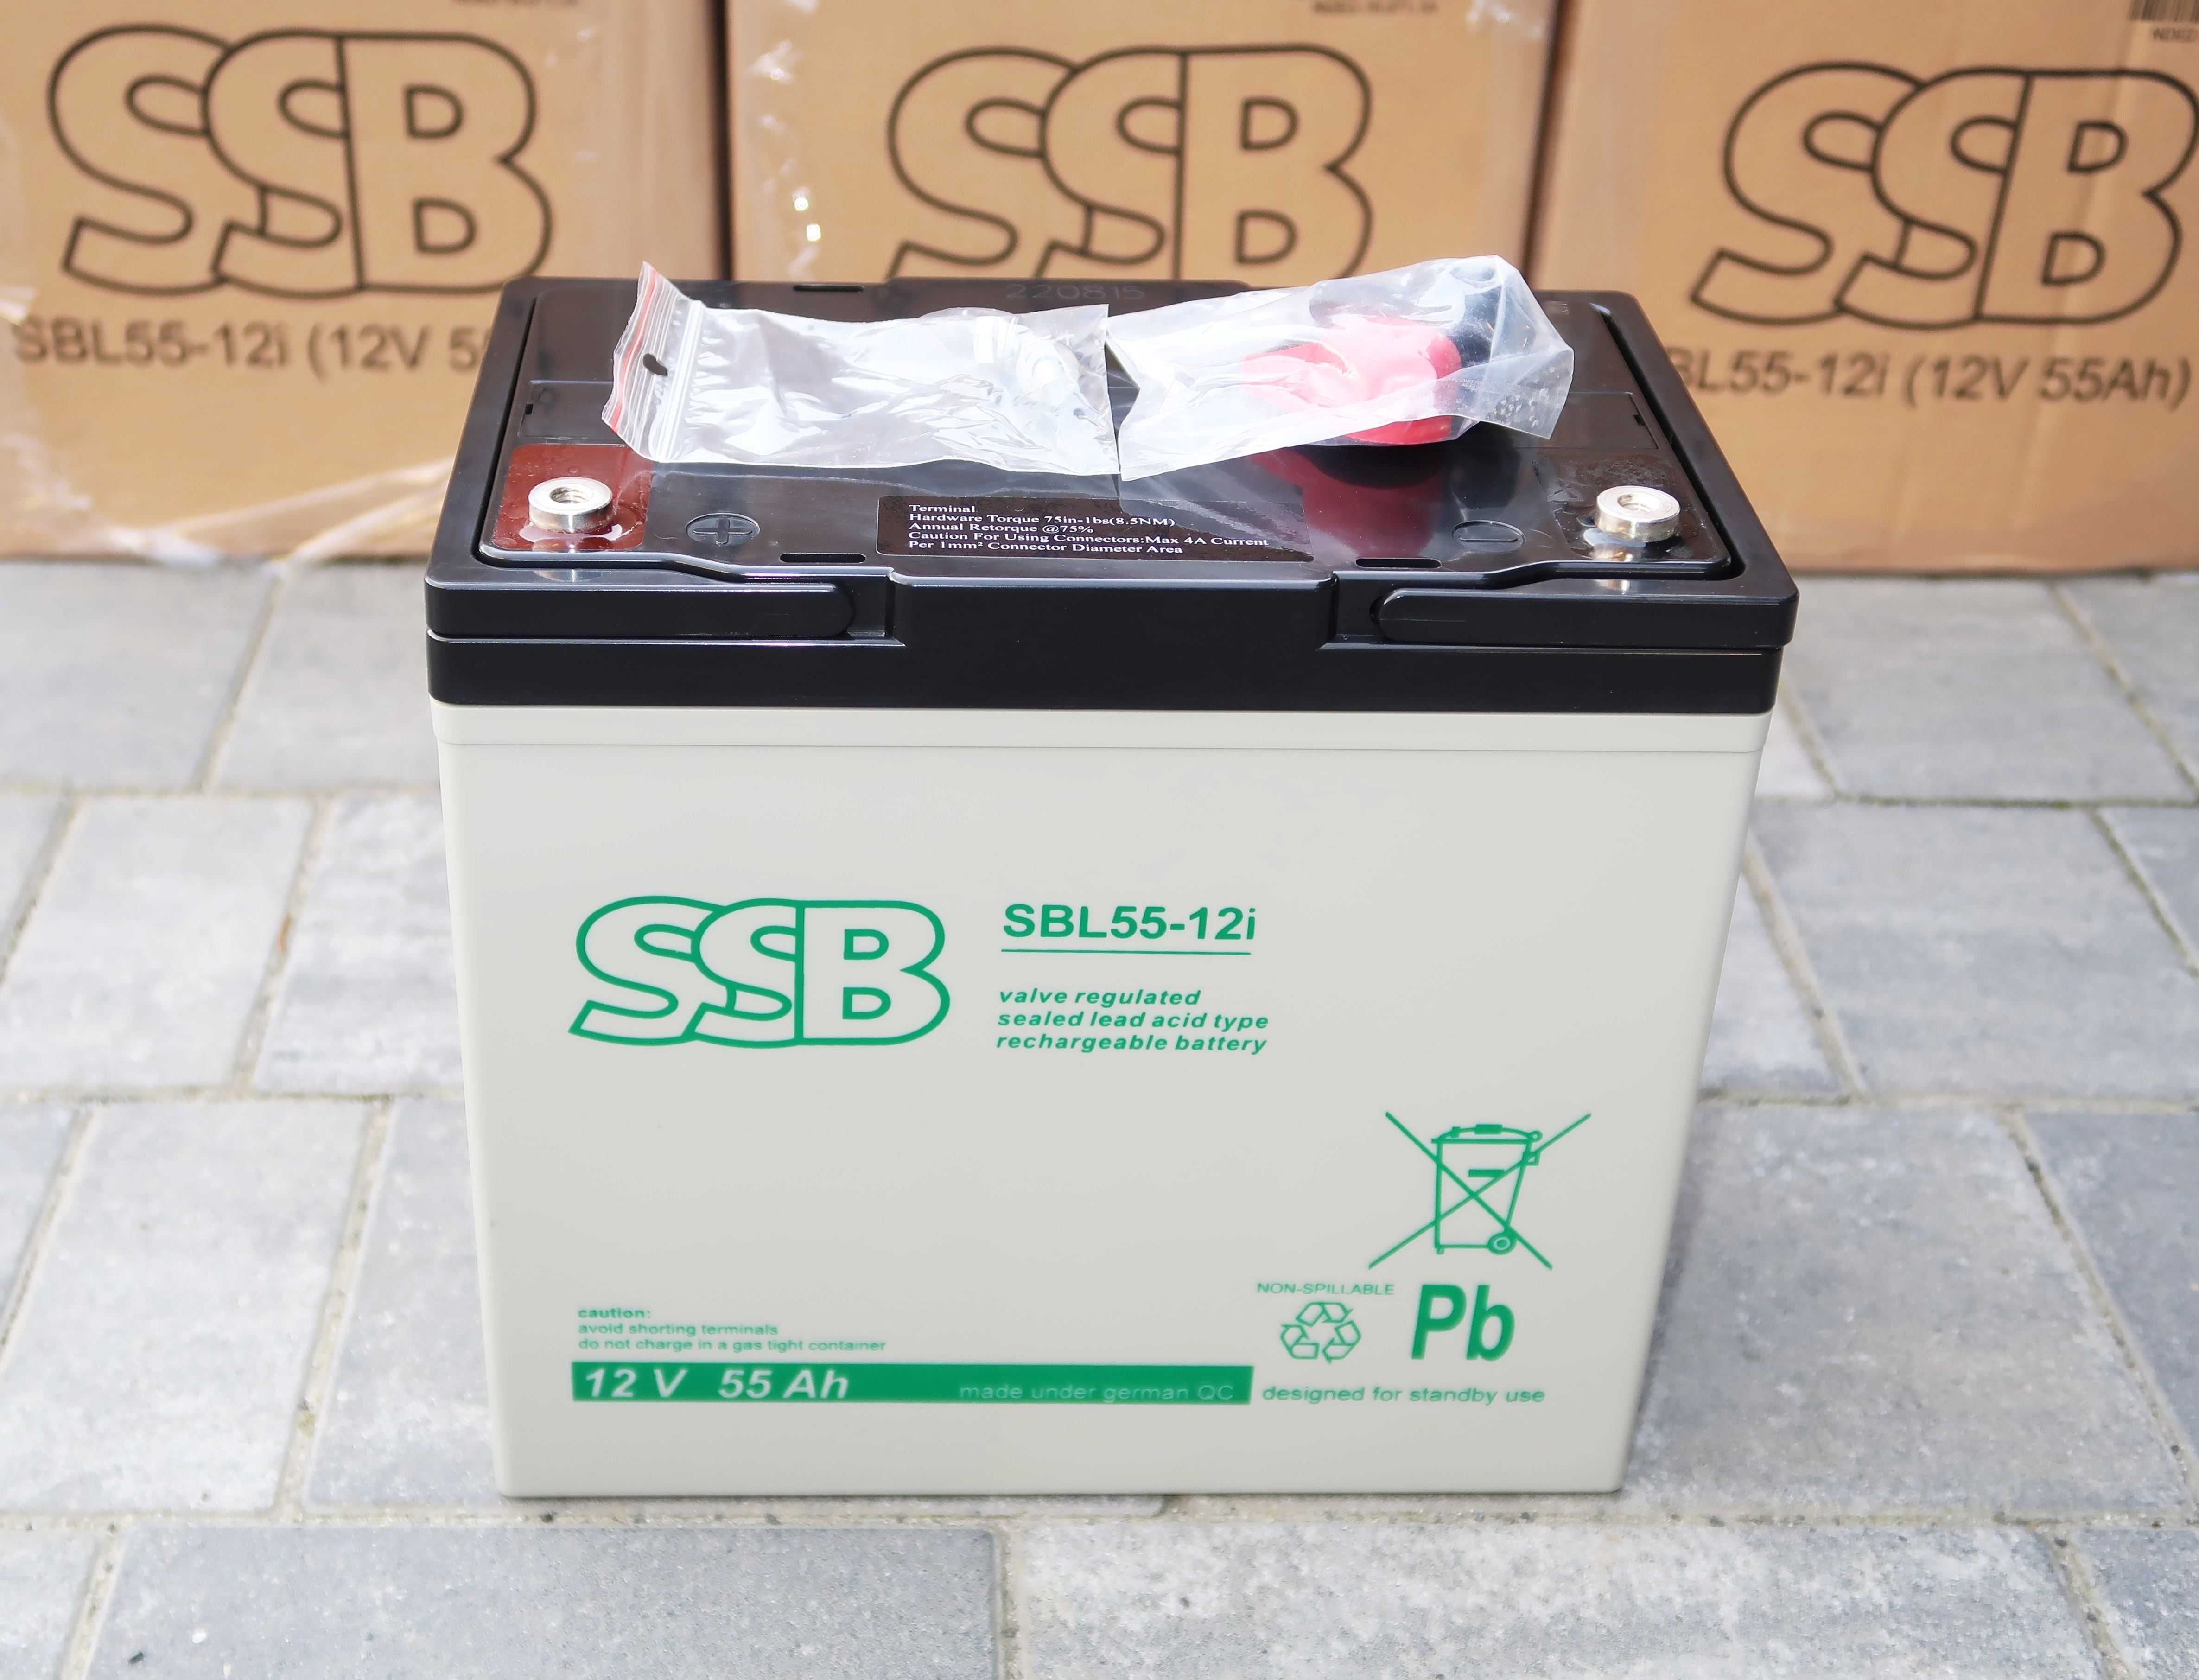 Akumulatory SSB AGM żelowe 55Ah zamien. 45Ah, 50Ah, 80Ah, 100Ah – NOWE